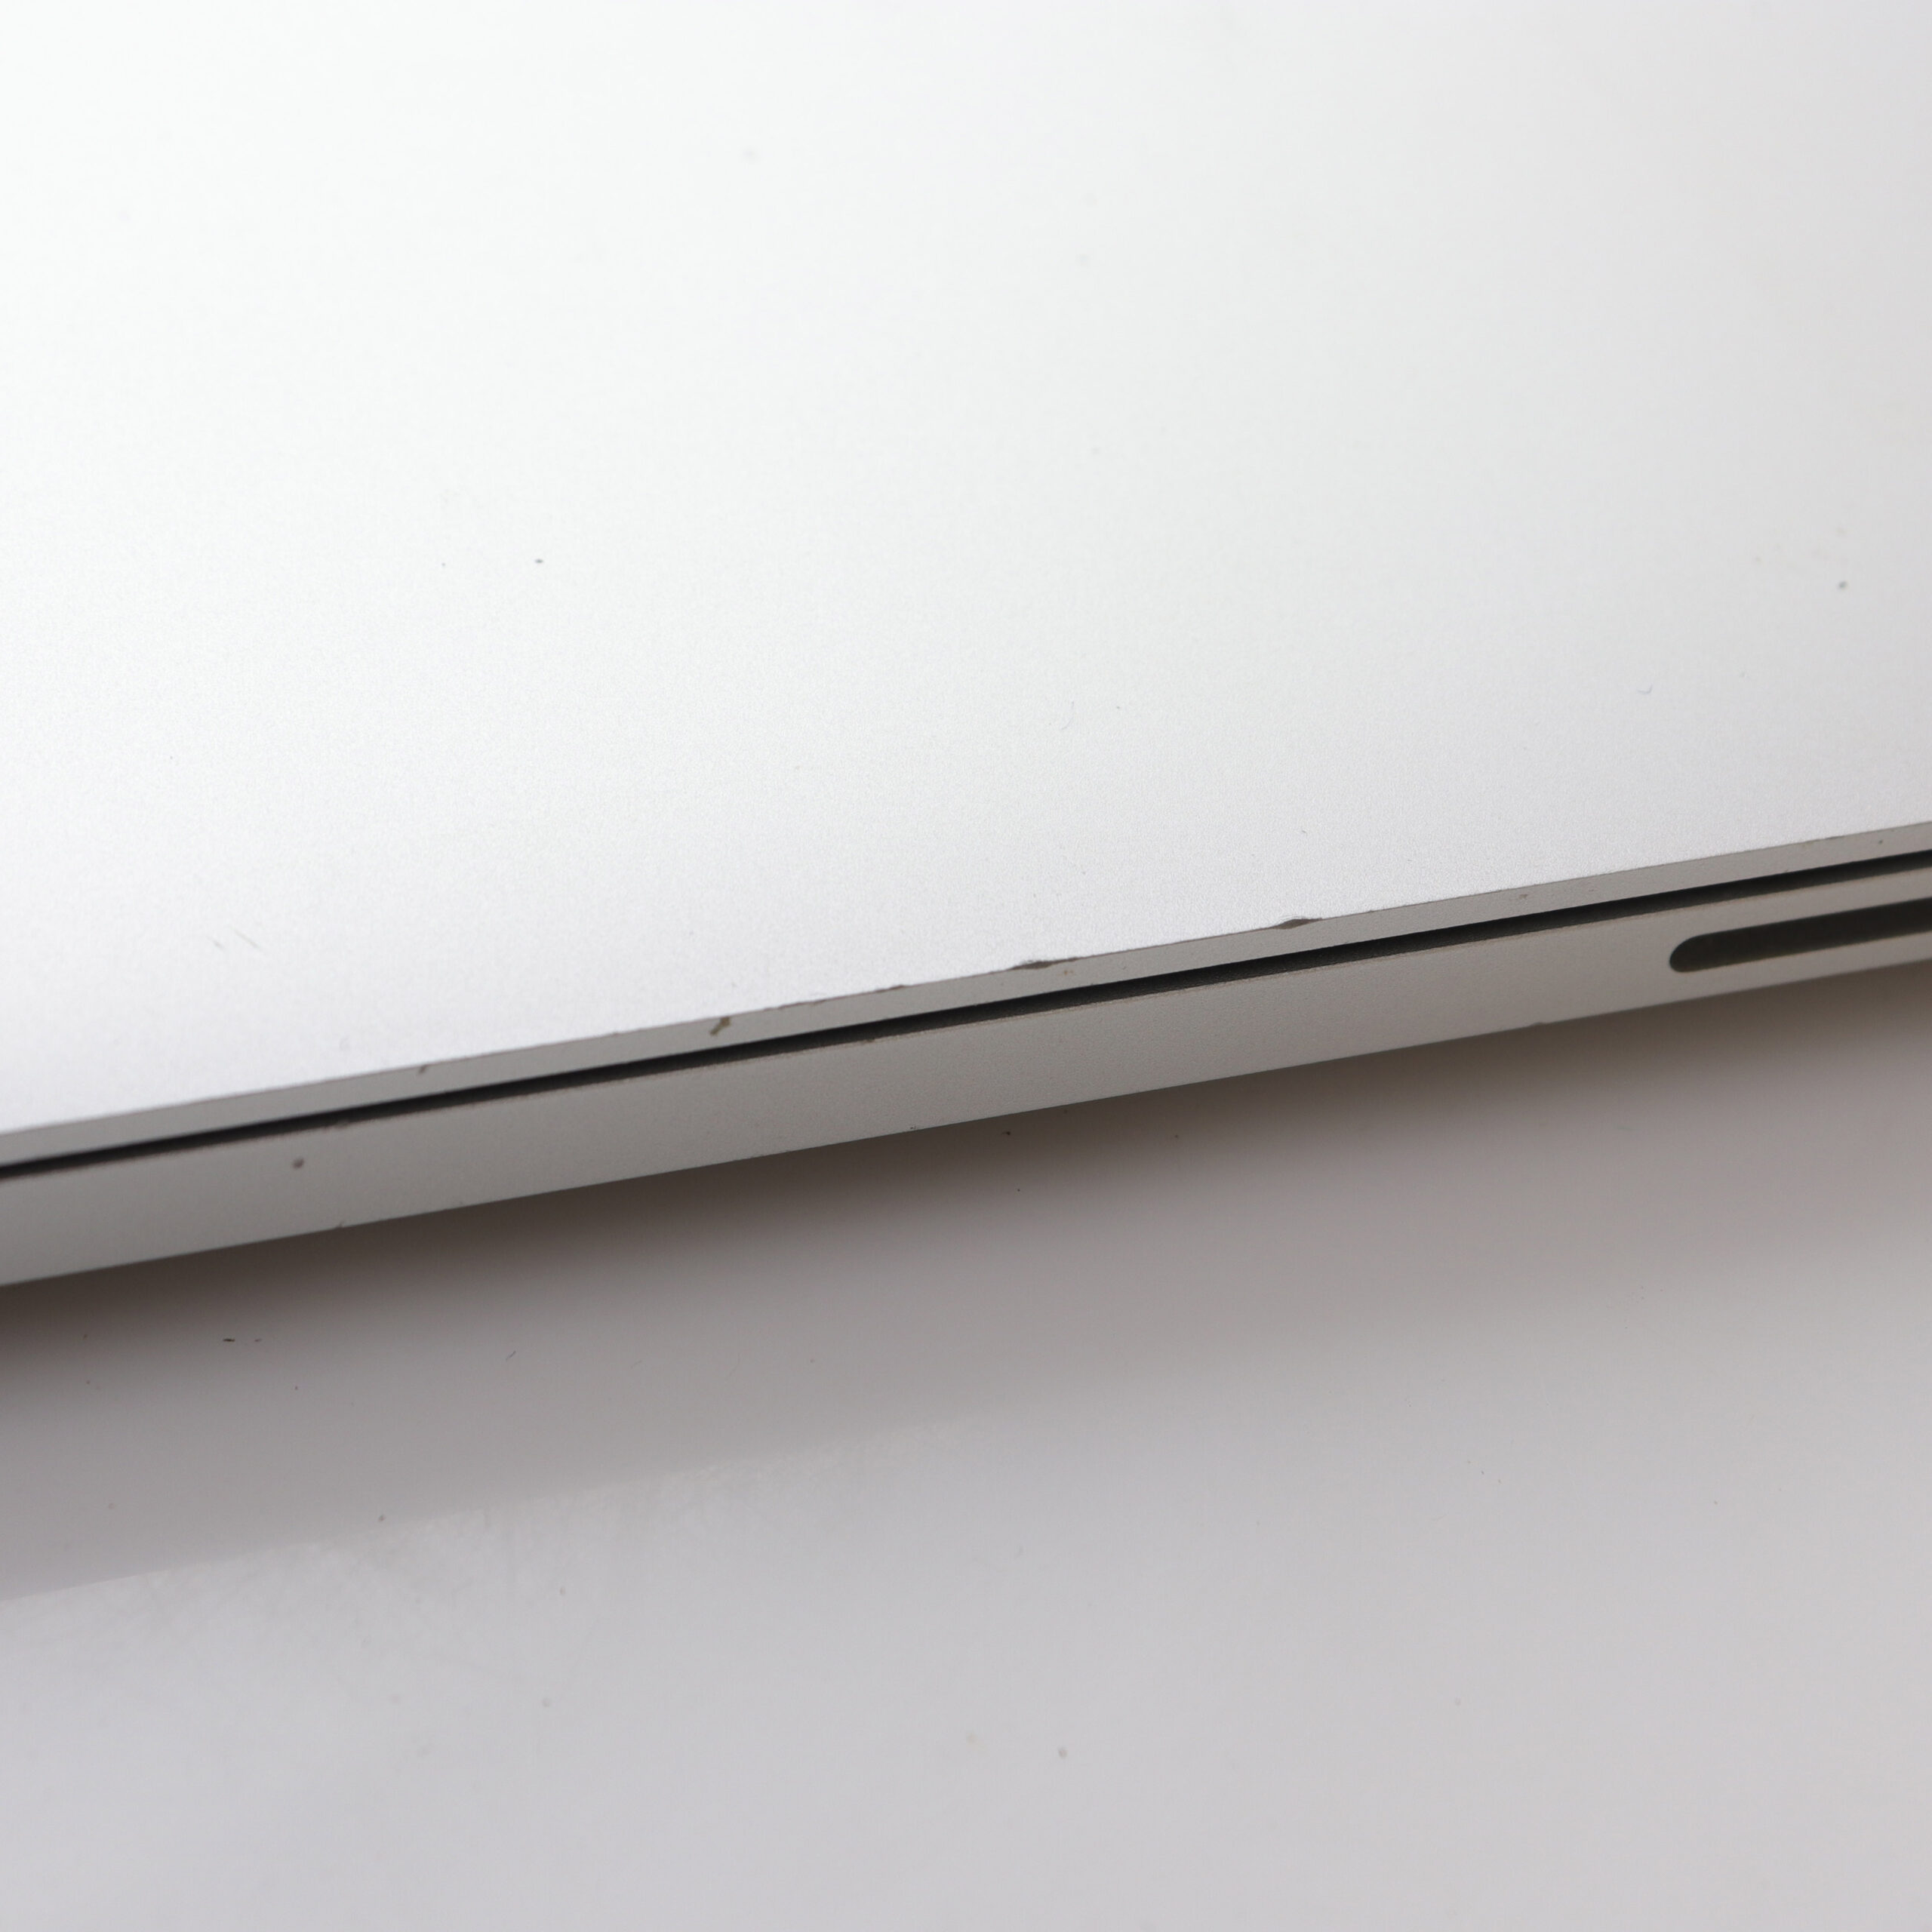 MacBook with worn edge